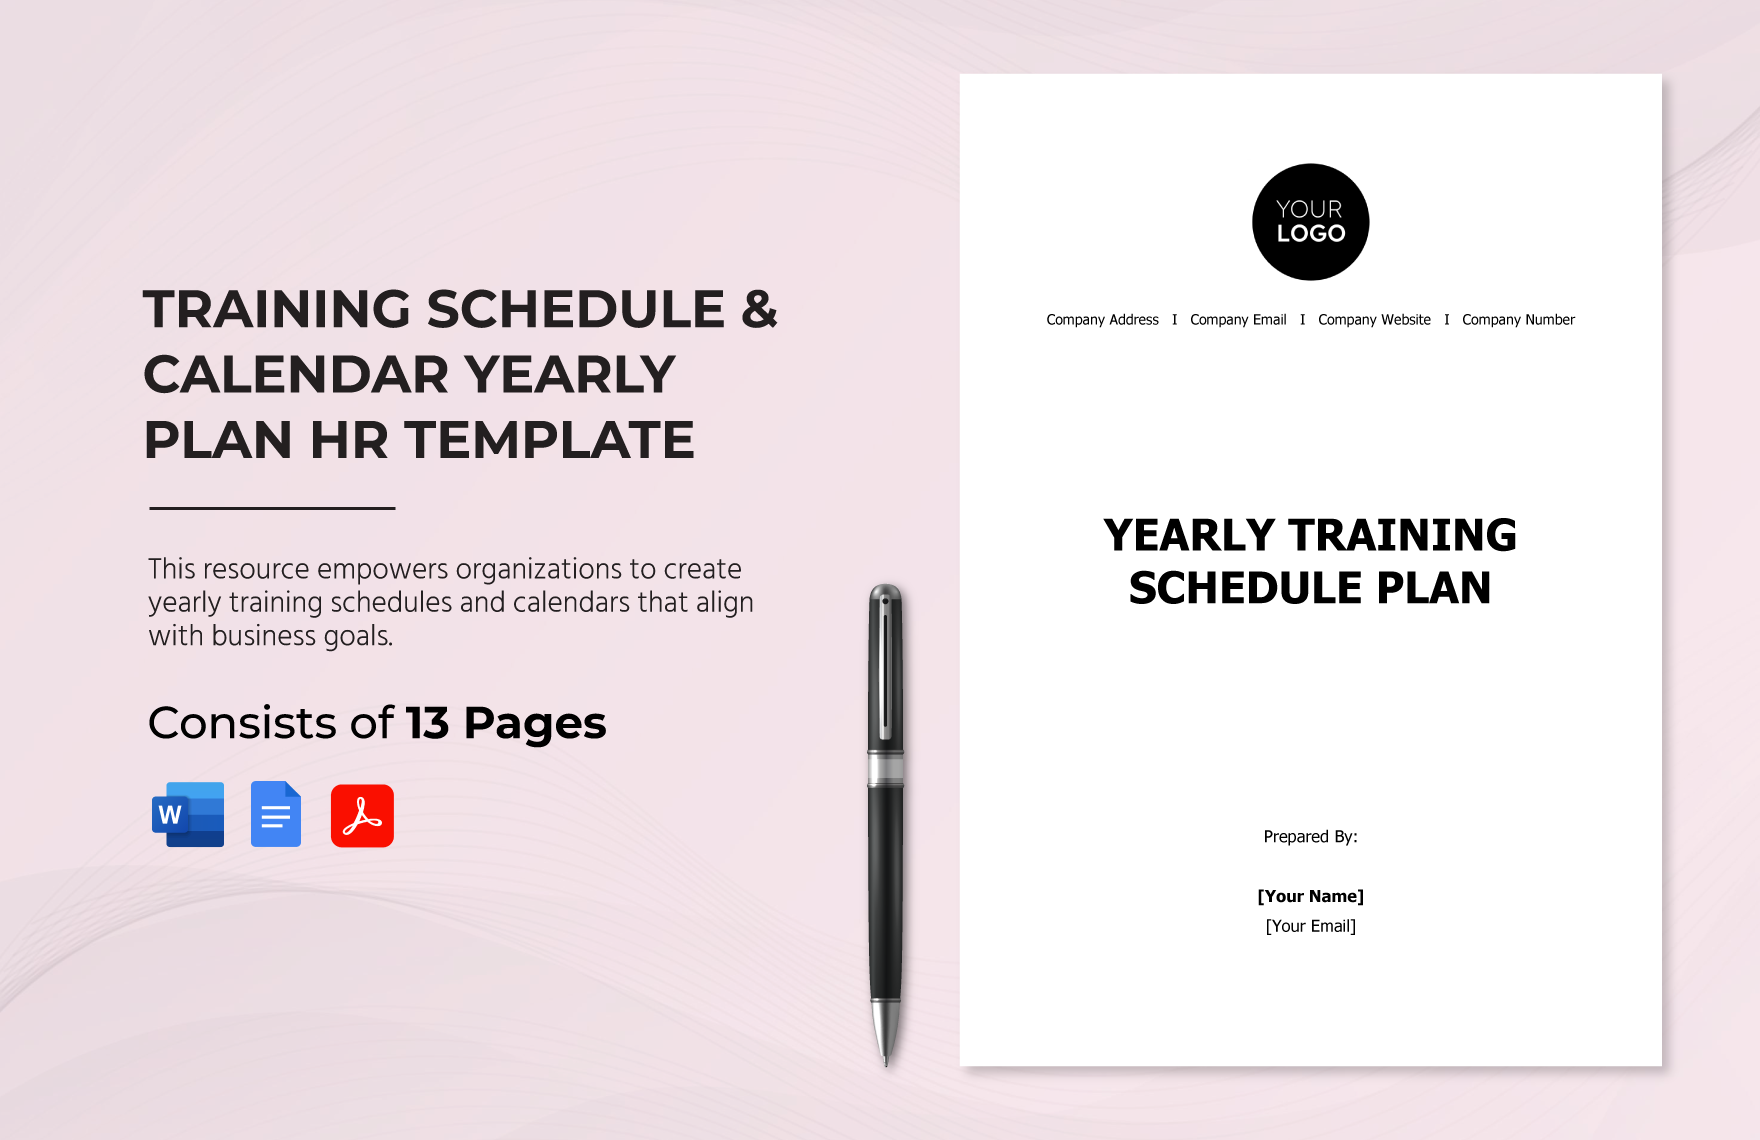 Training Schedule & Calendar Yearly Plan HR Template